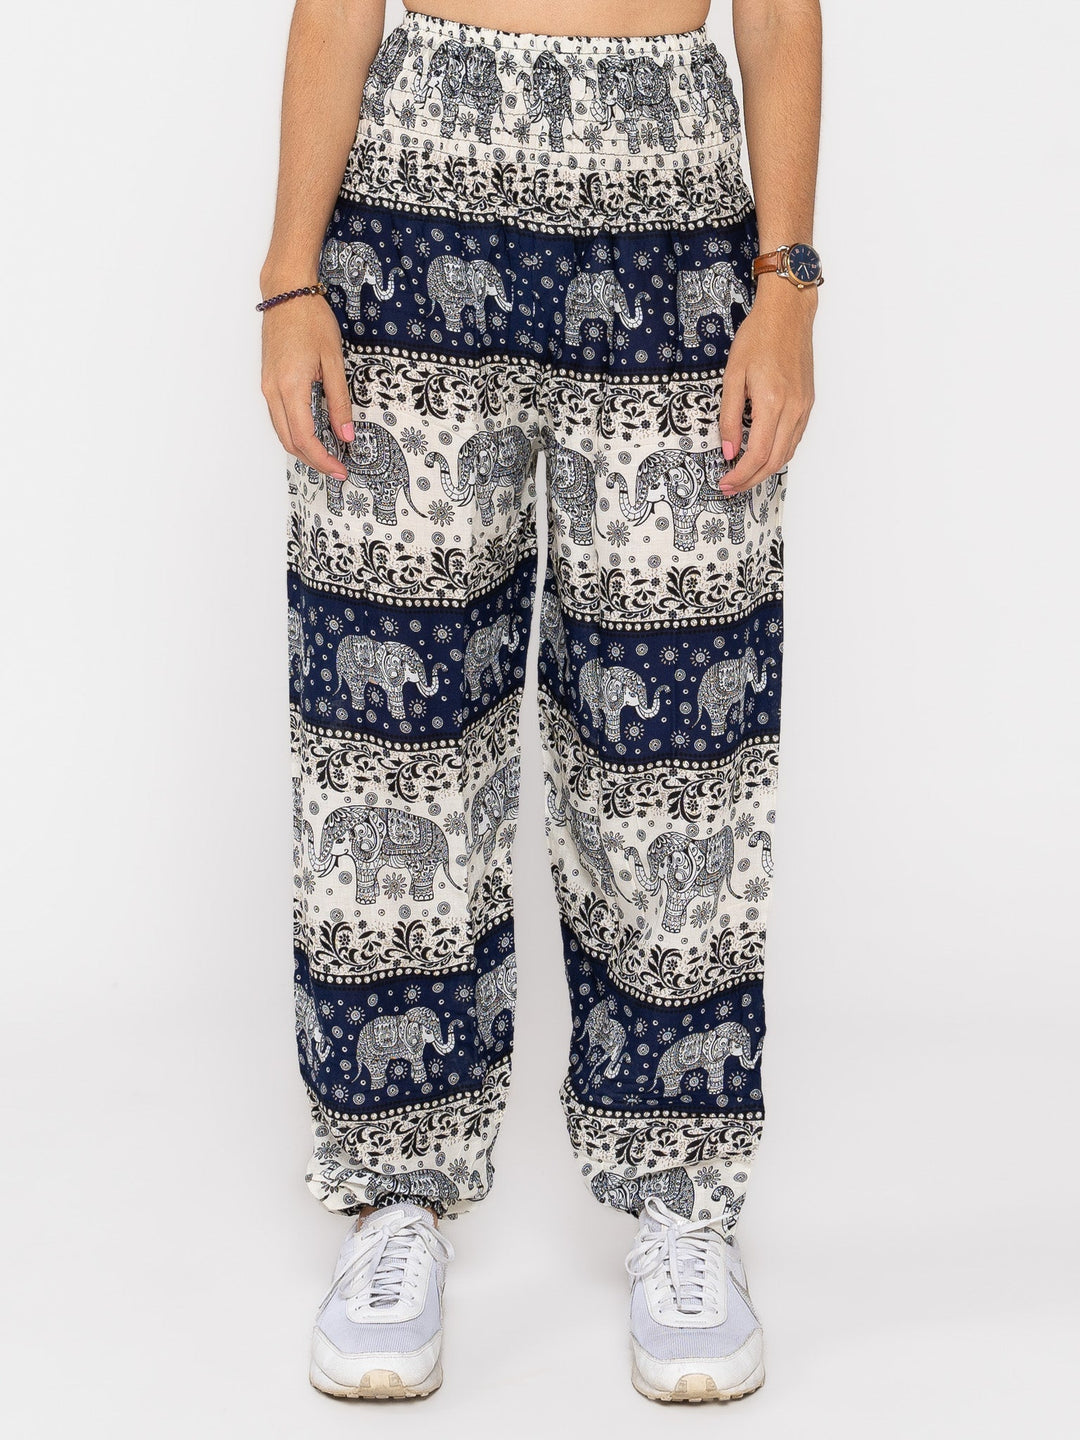 Maisha Azul Oscuro - Pantsforlove Pantalones anchos, pantalones yoga